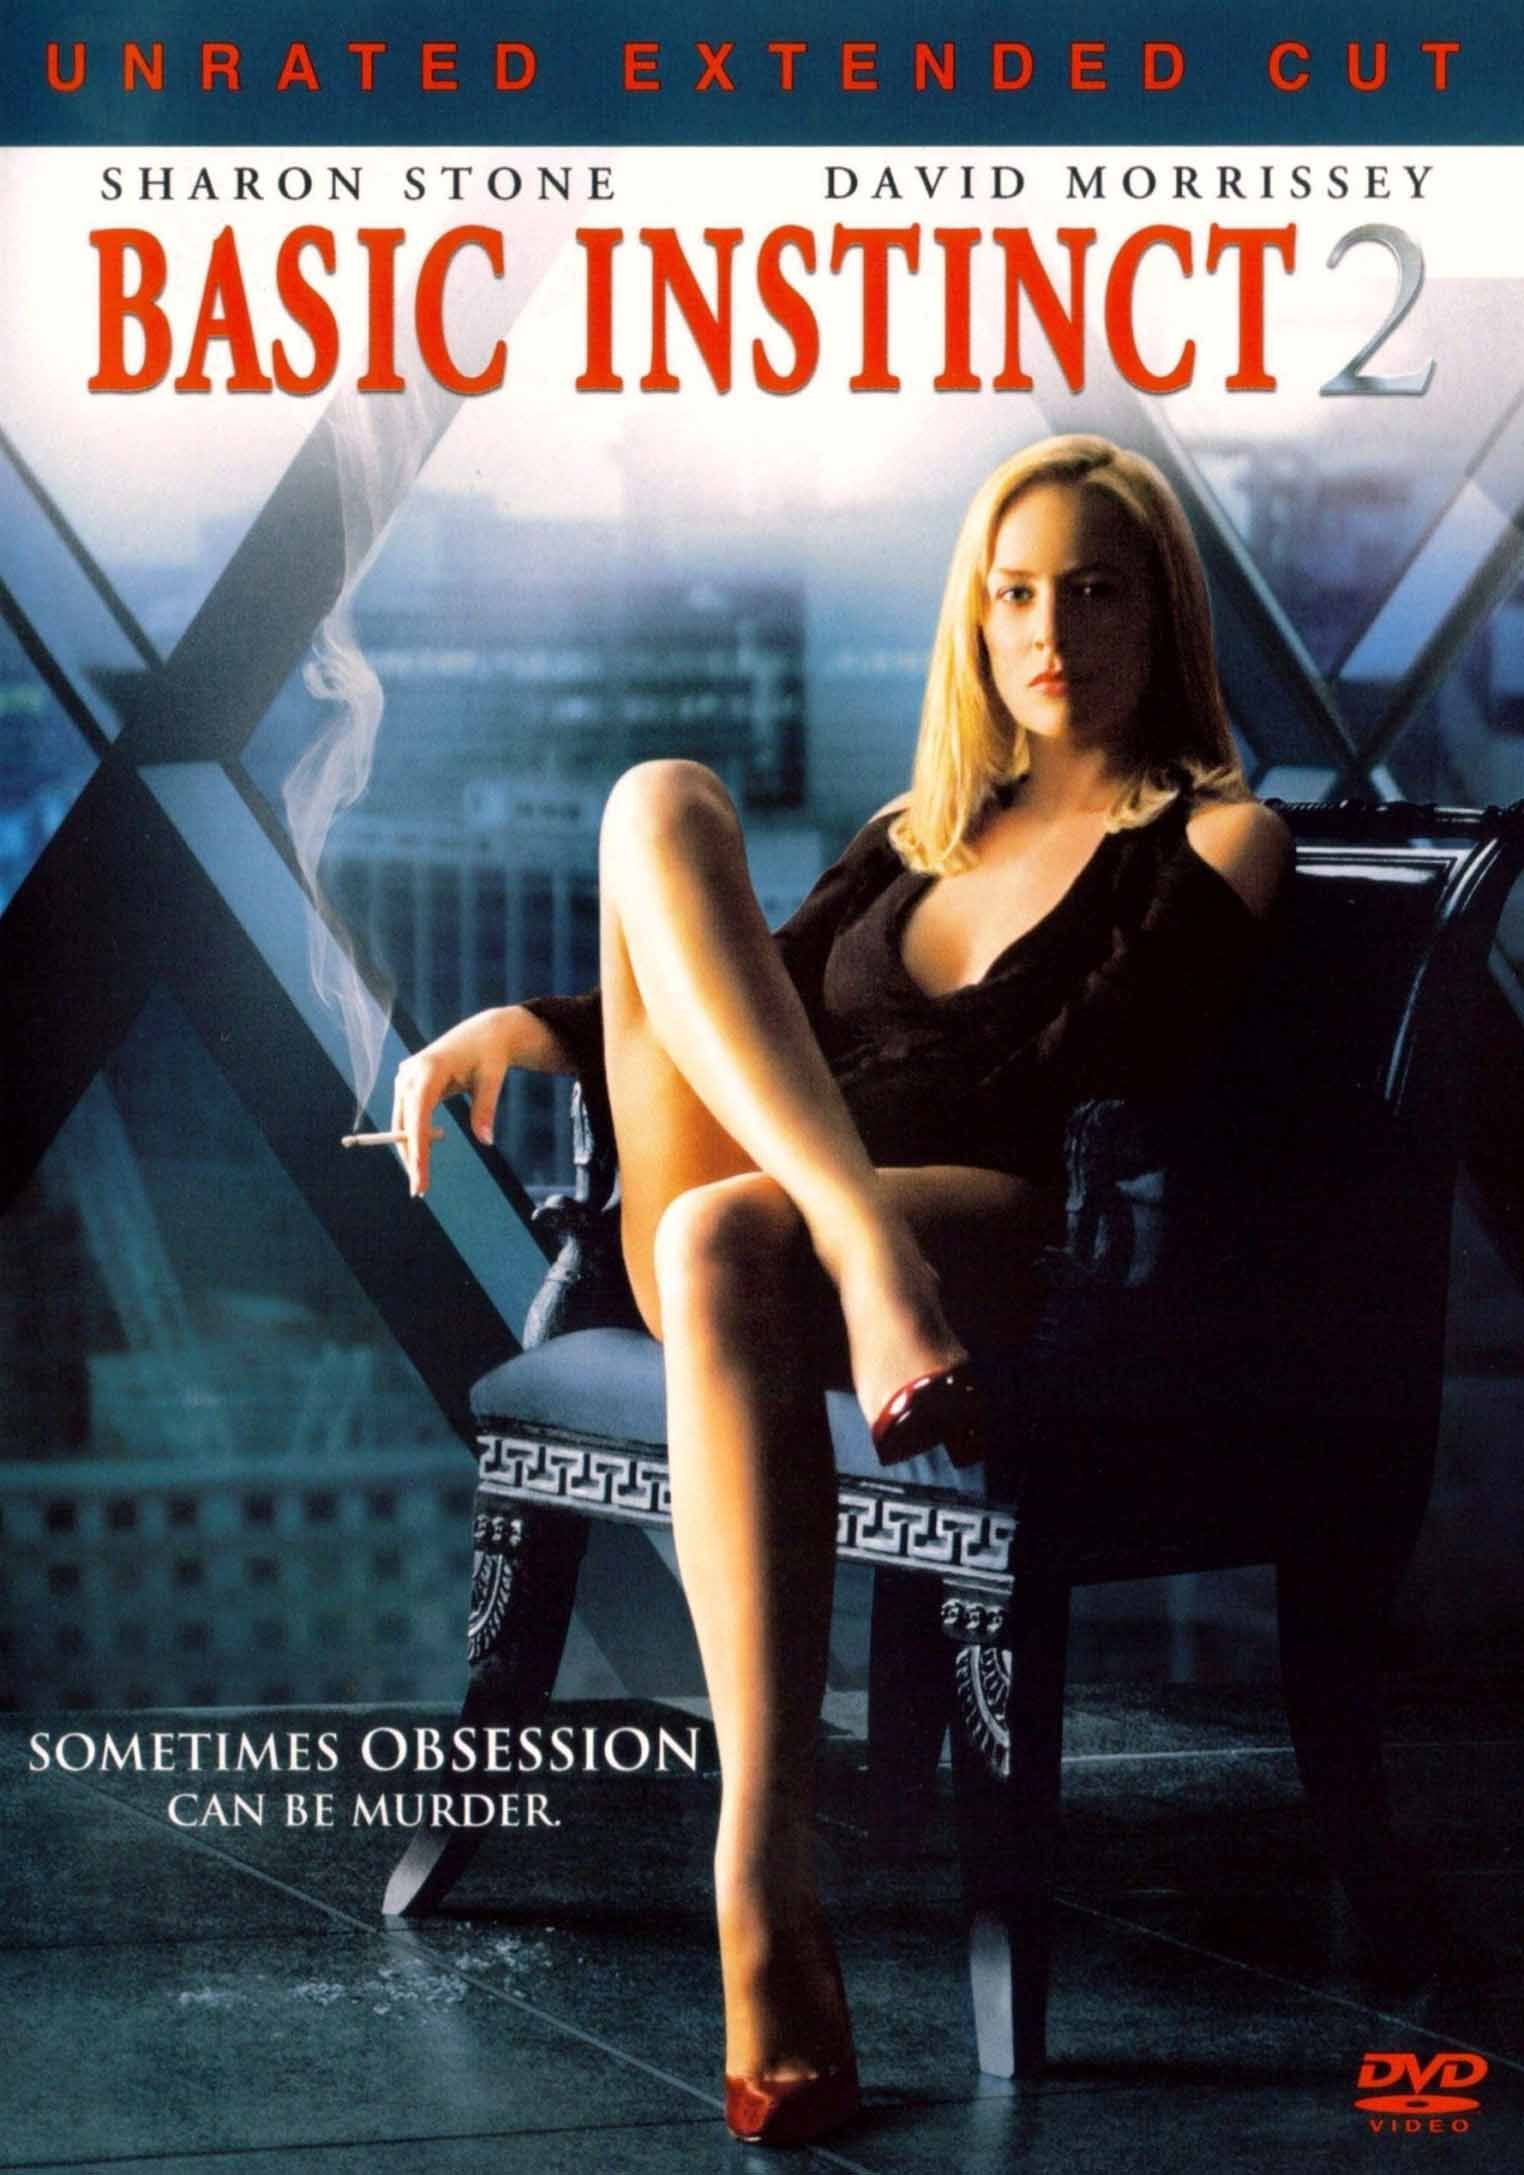 Basic Instinct 2 (2006) (Sharon Stone) Full Movie Free Online